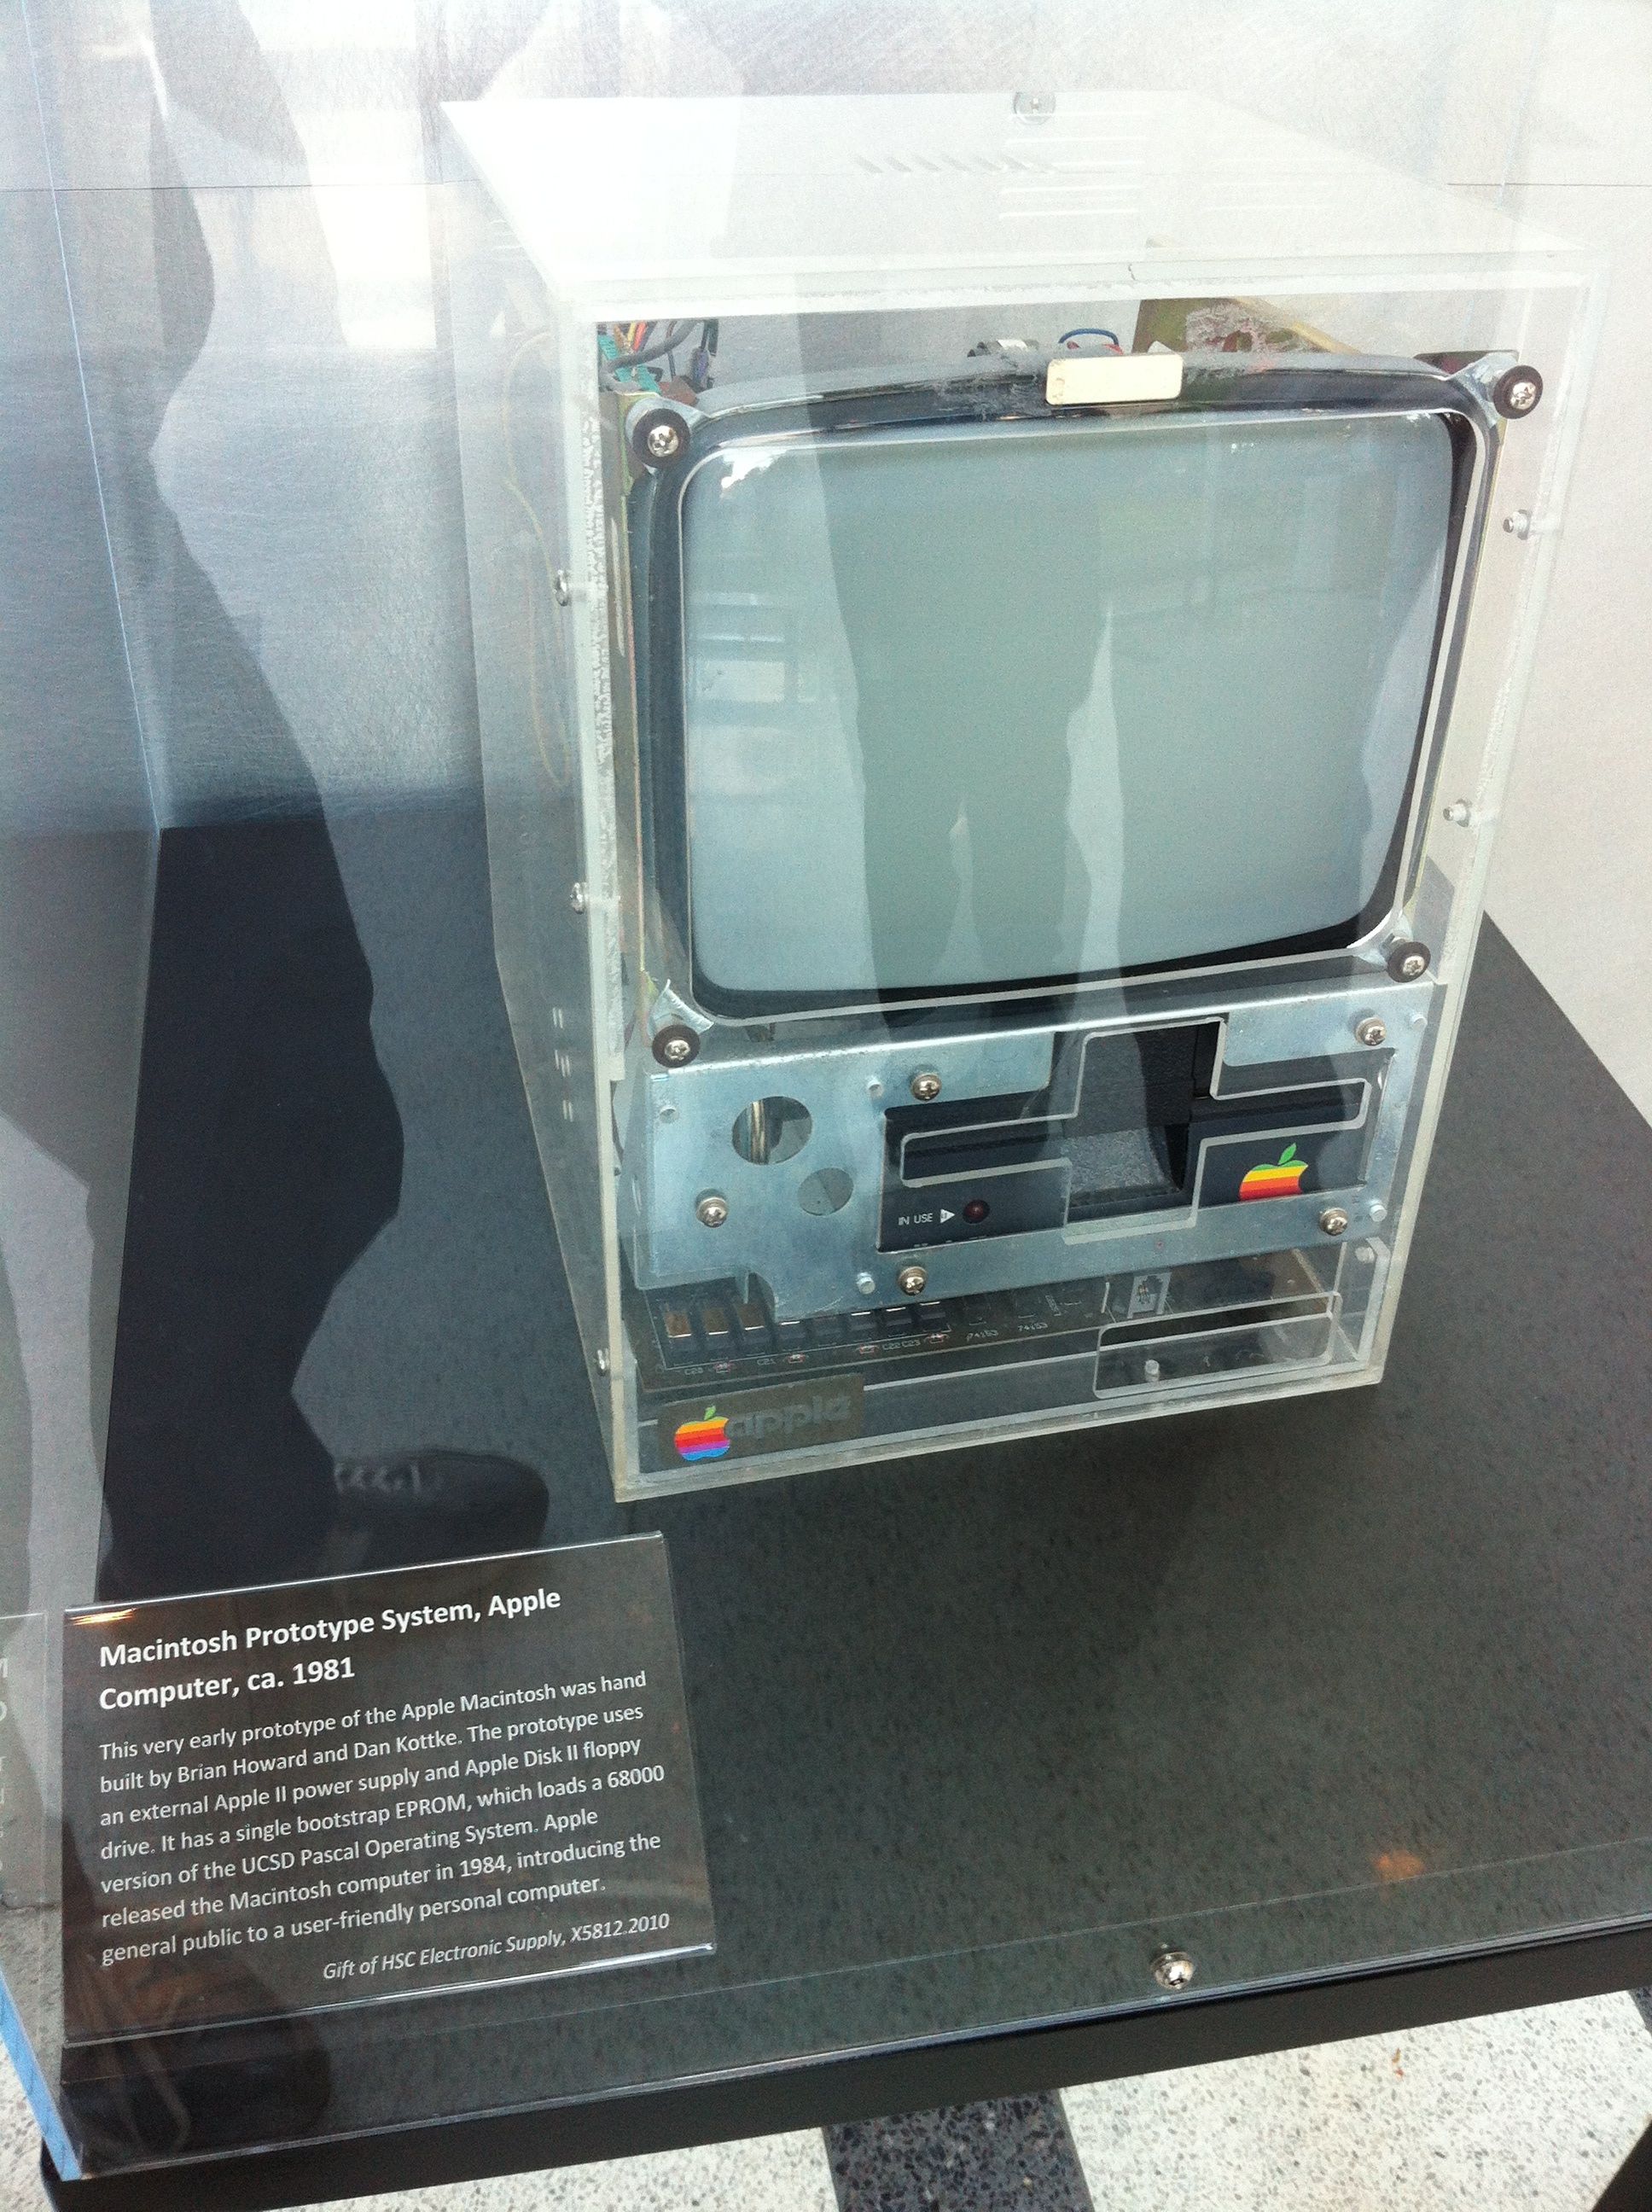 Sary Early Macintosh Prototype Computer History Museum Mountain View California 13 04 11 23 45 Jpg Wikipedia